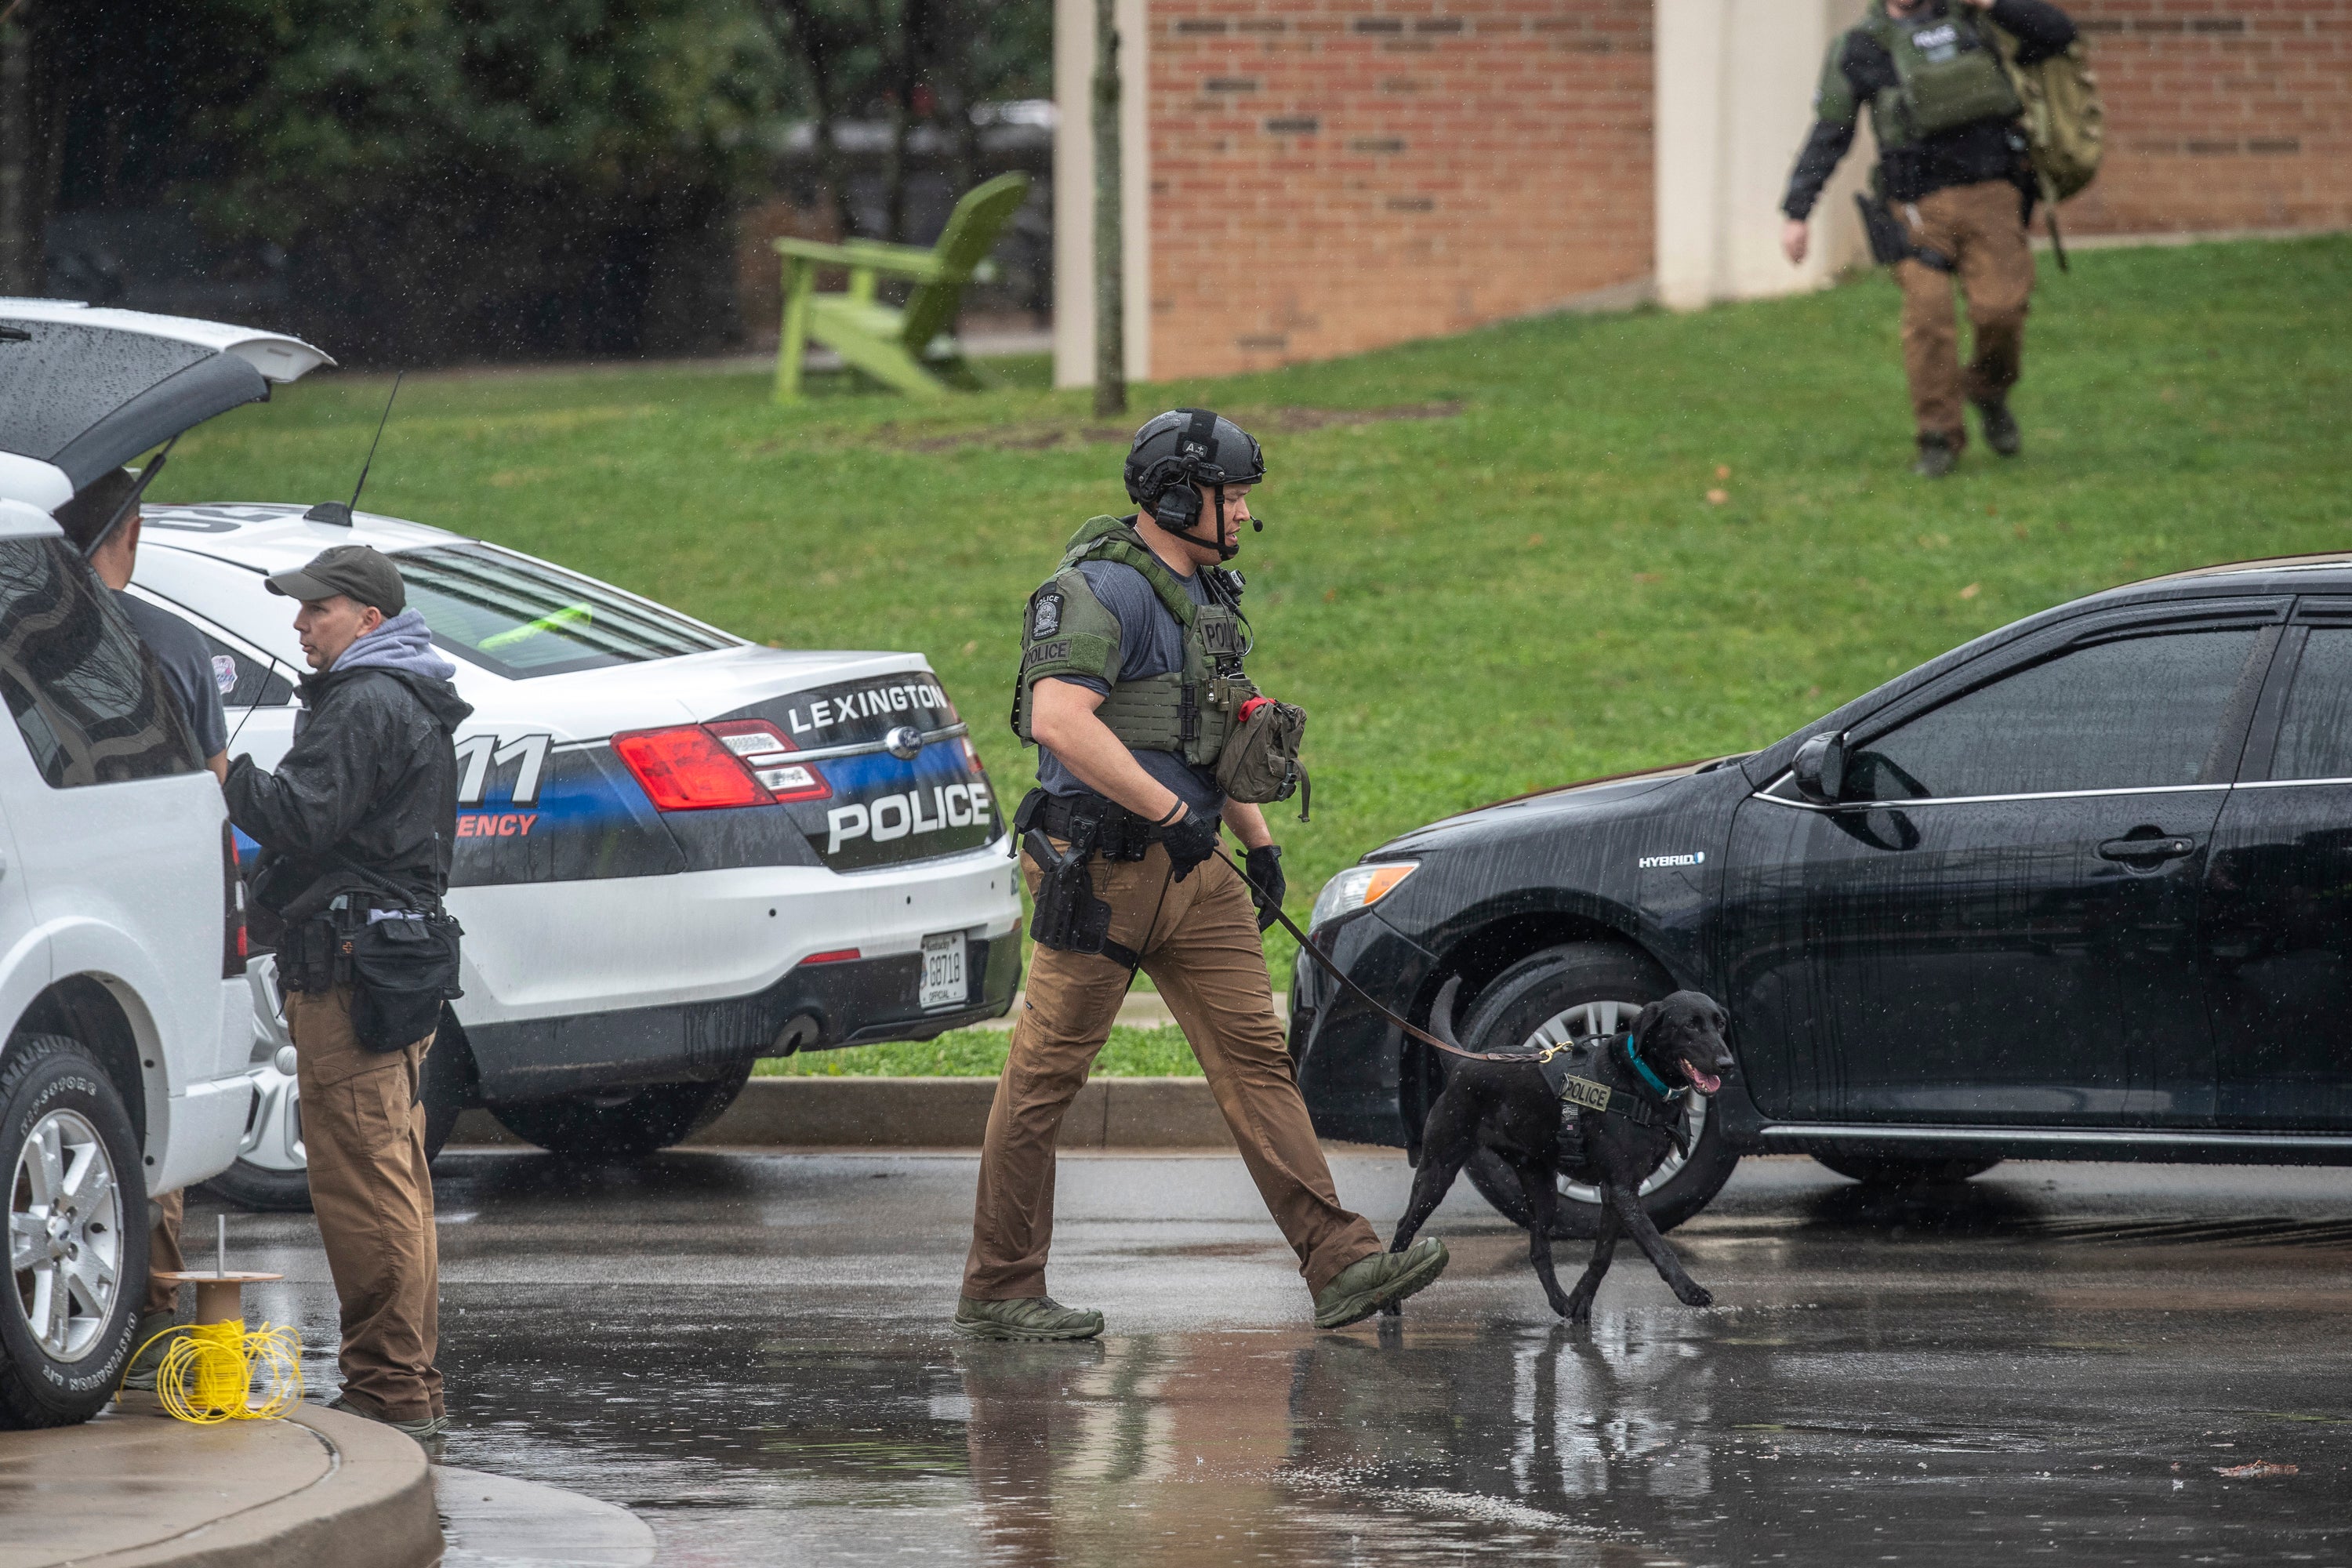 Detective Armed man at hospital had rifles, explosives Versailles Lexington FBI University of Kentucky The Independent